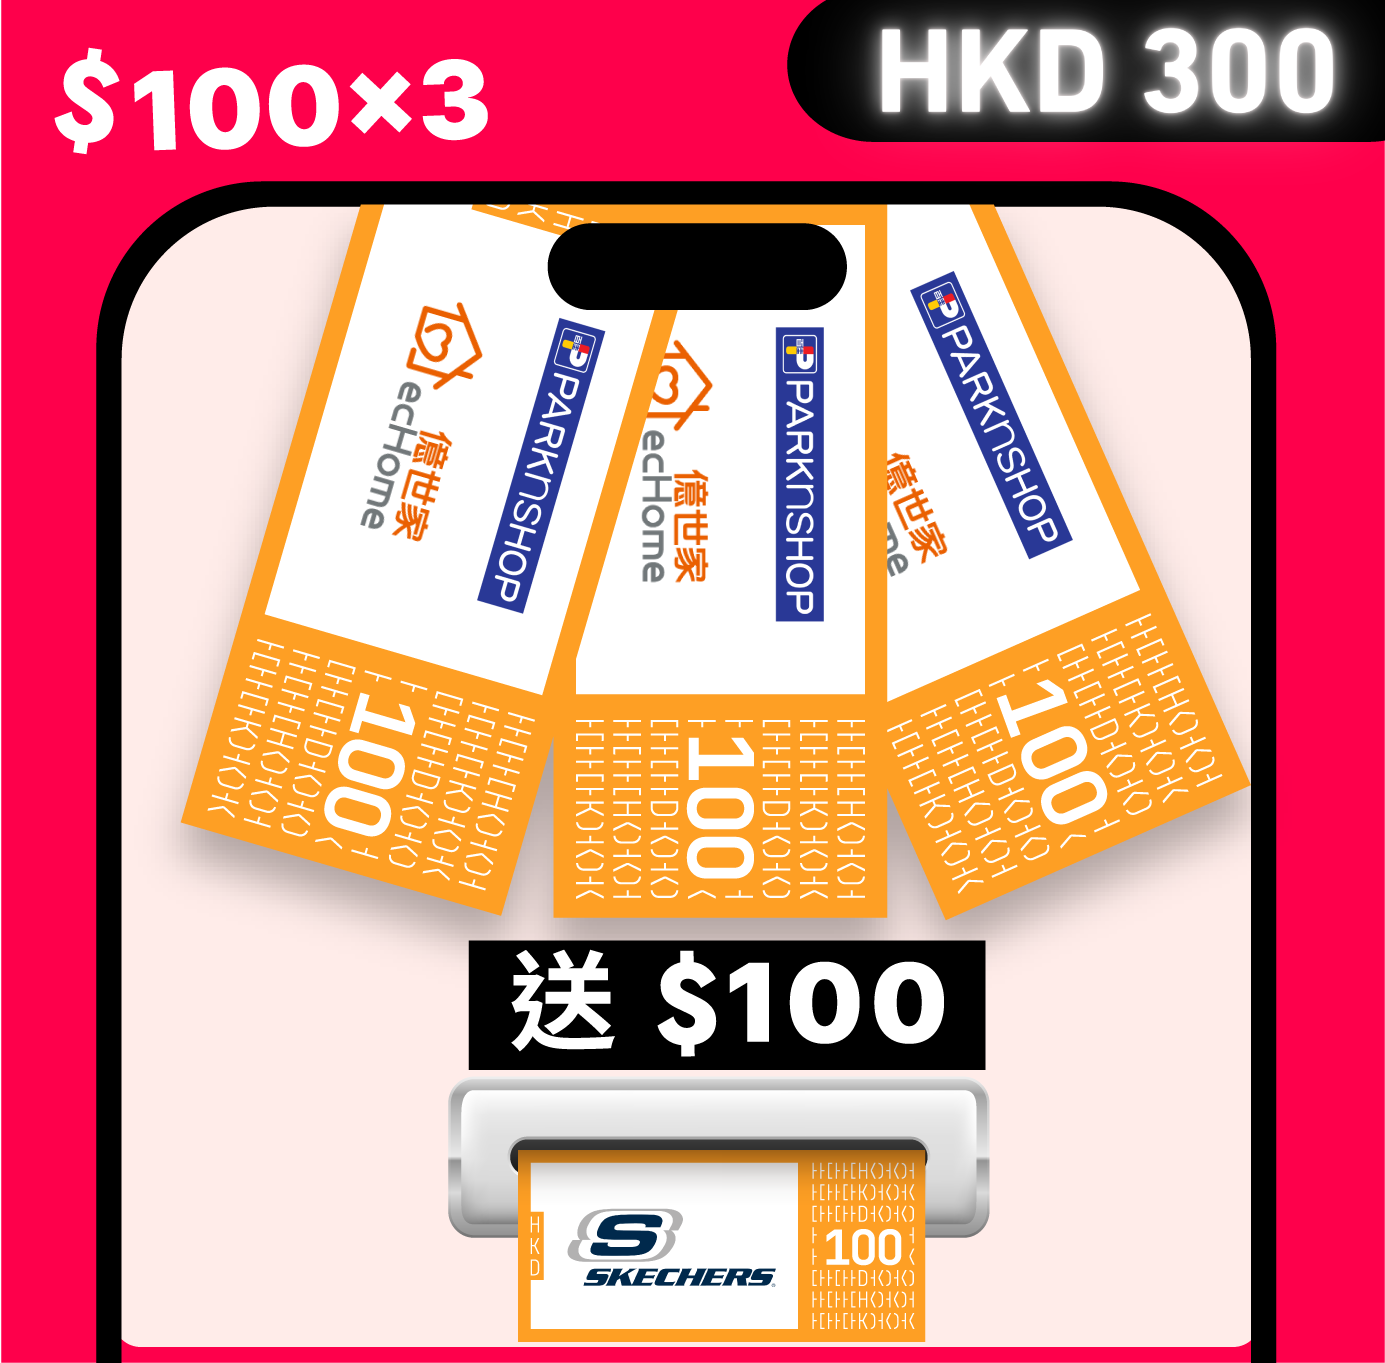 HKD 300 現金禮券套裝 A 組合 ｜ 加送 HKD 100 現金券